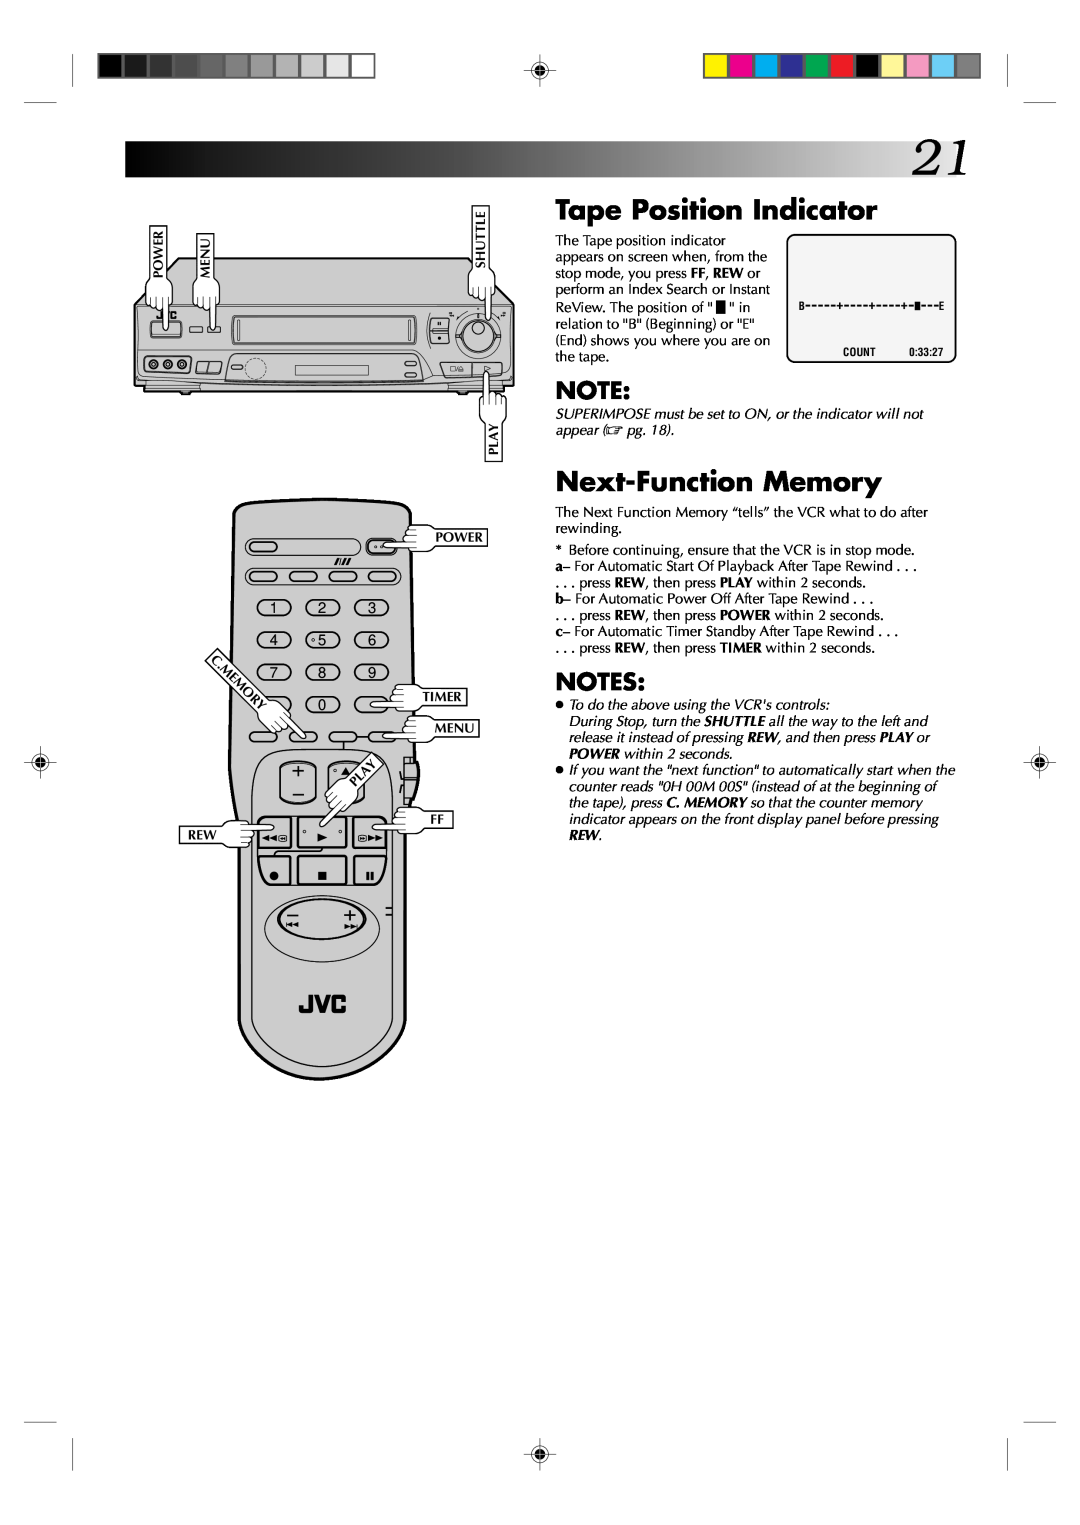 JVC HR-J631T manual Tape Position Indicator, Next-Function Memory 